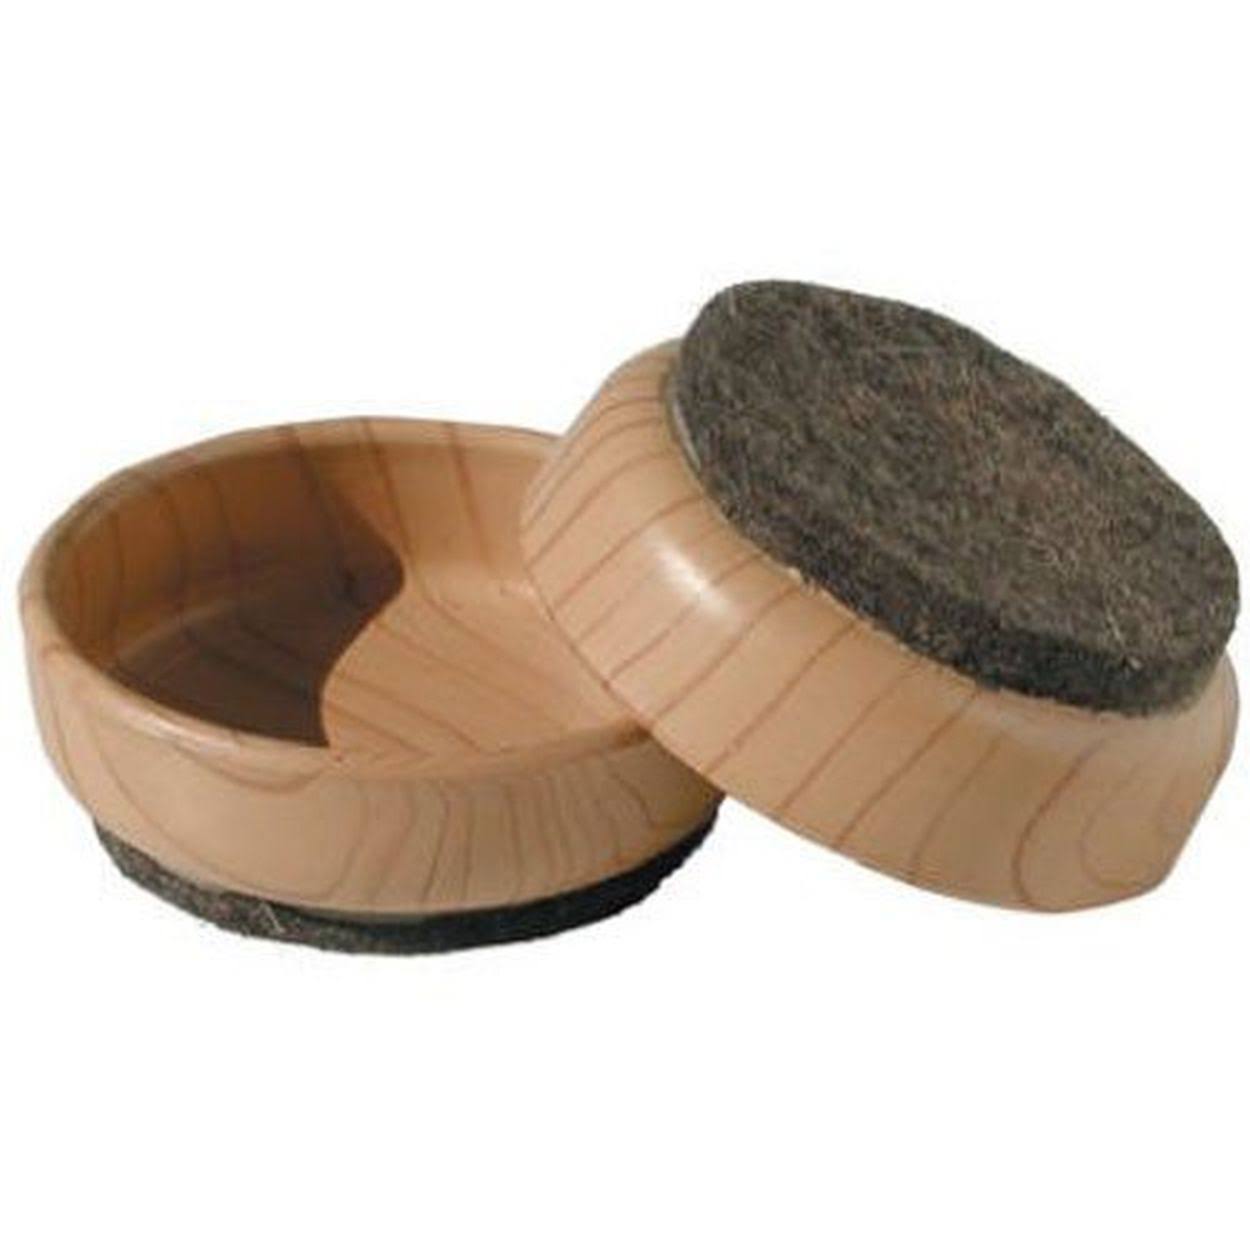 Shepherd Hardware 9364 Wood Furniture Cup - 2-3/8", 4pk